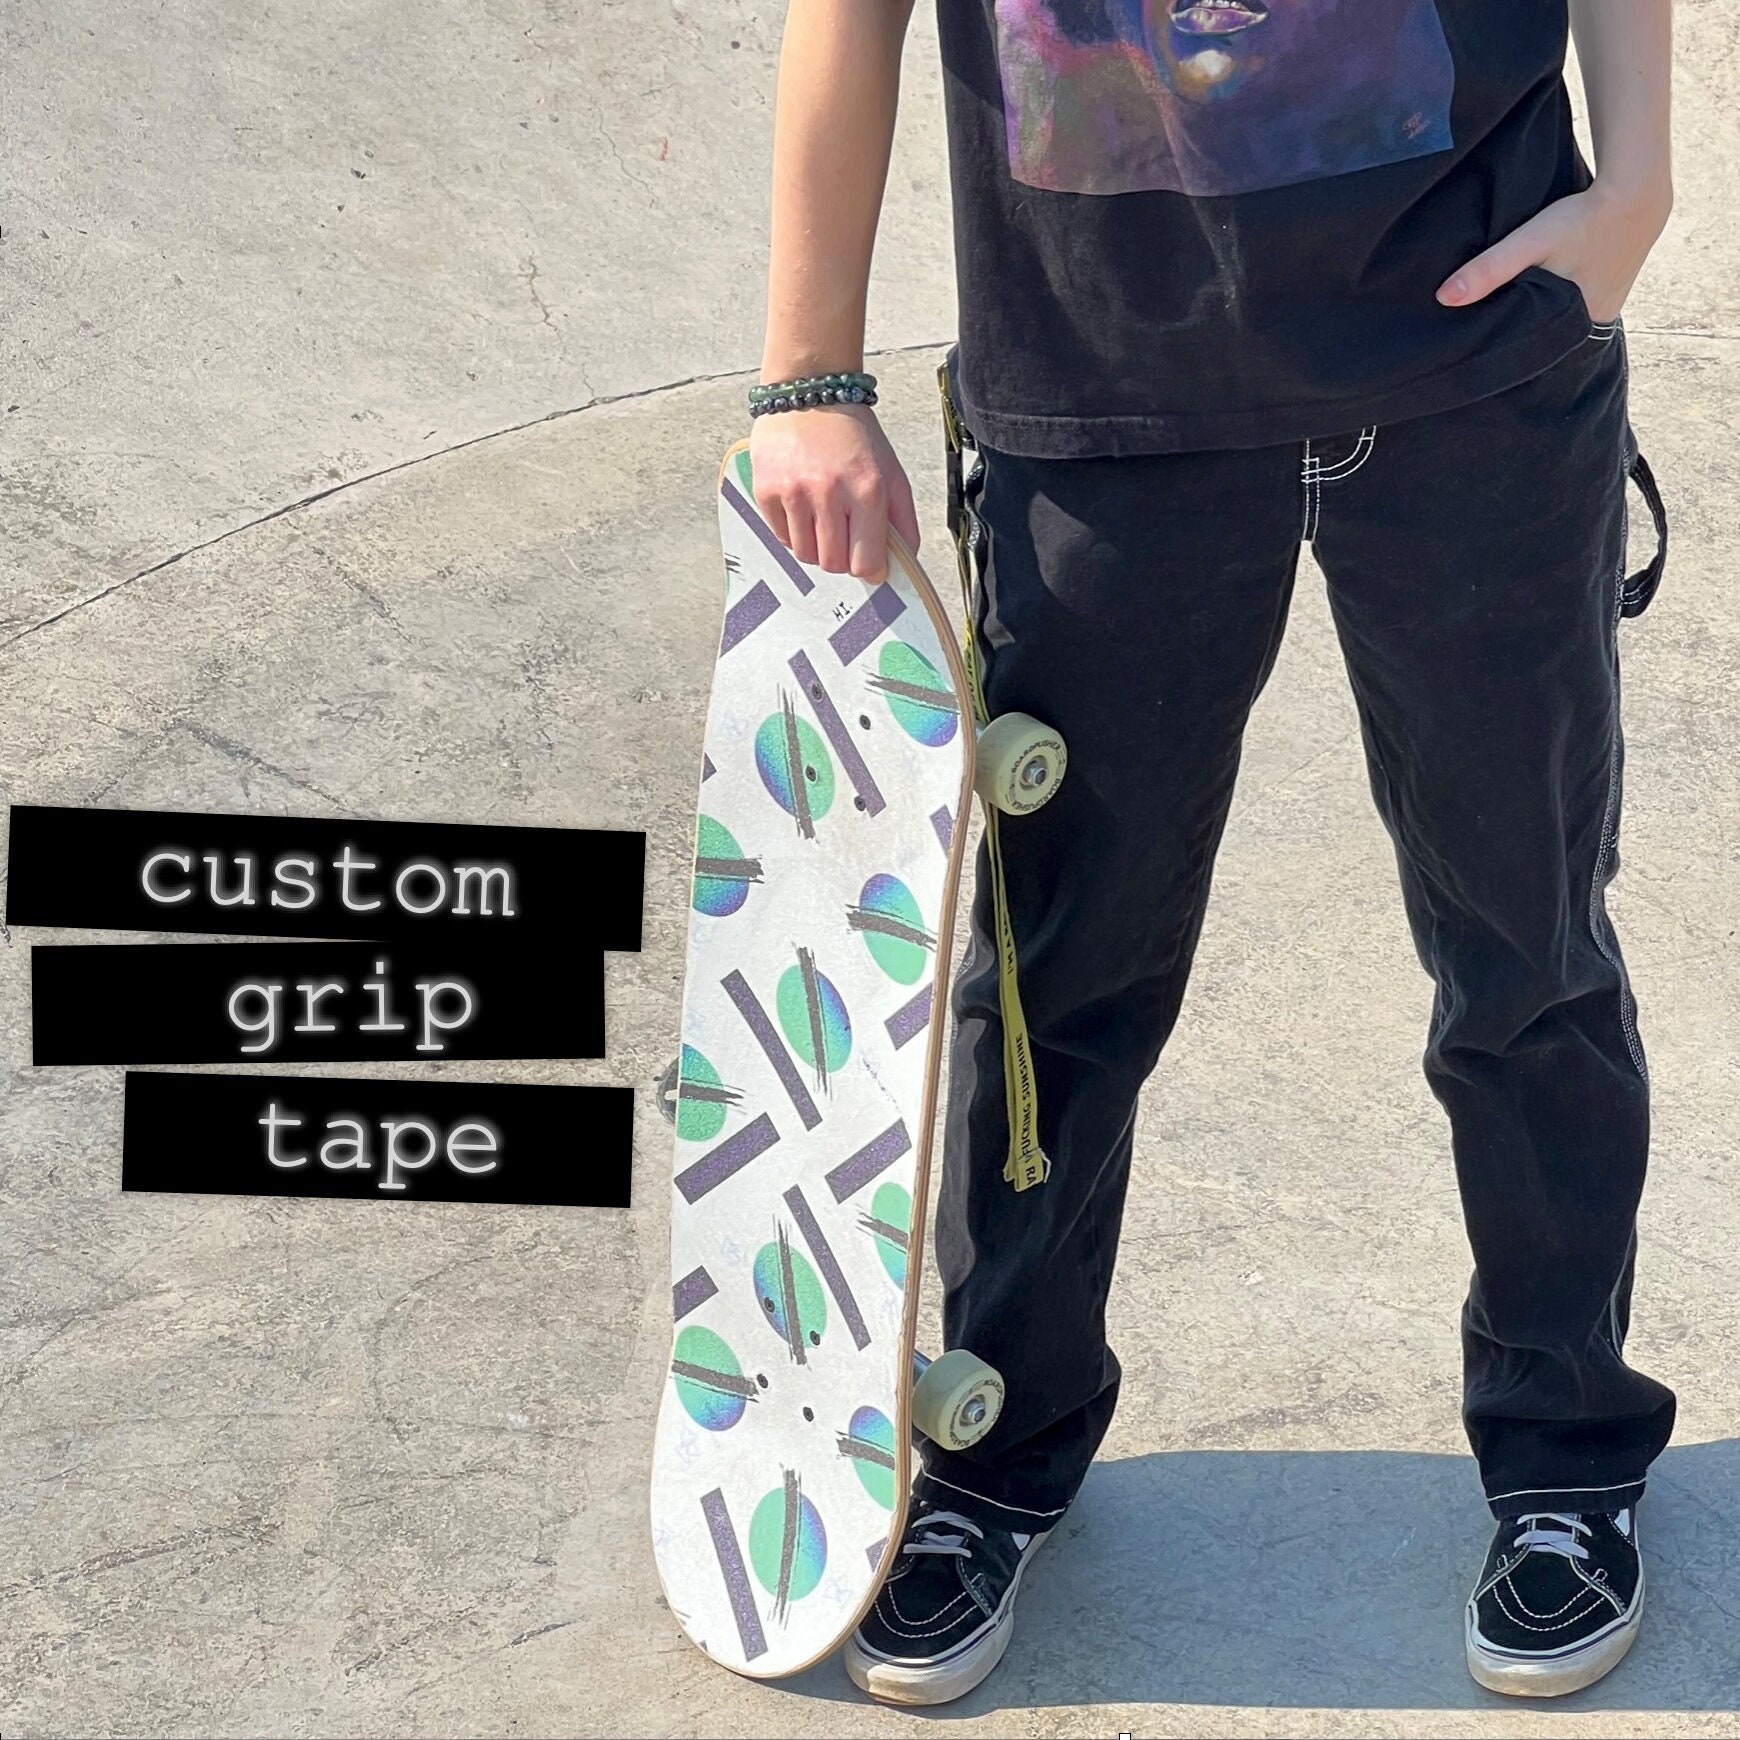 how to clean clear griptape skateboard or longboard 